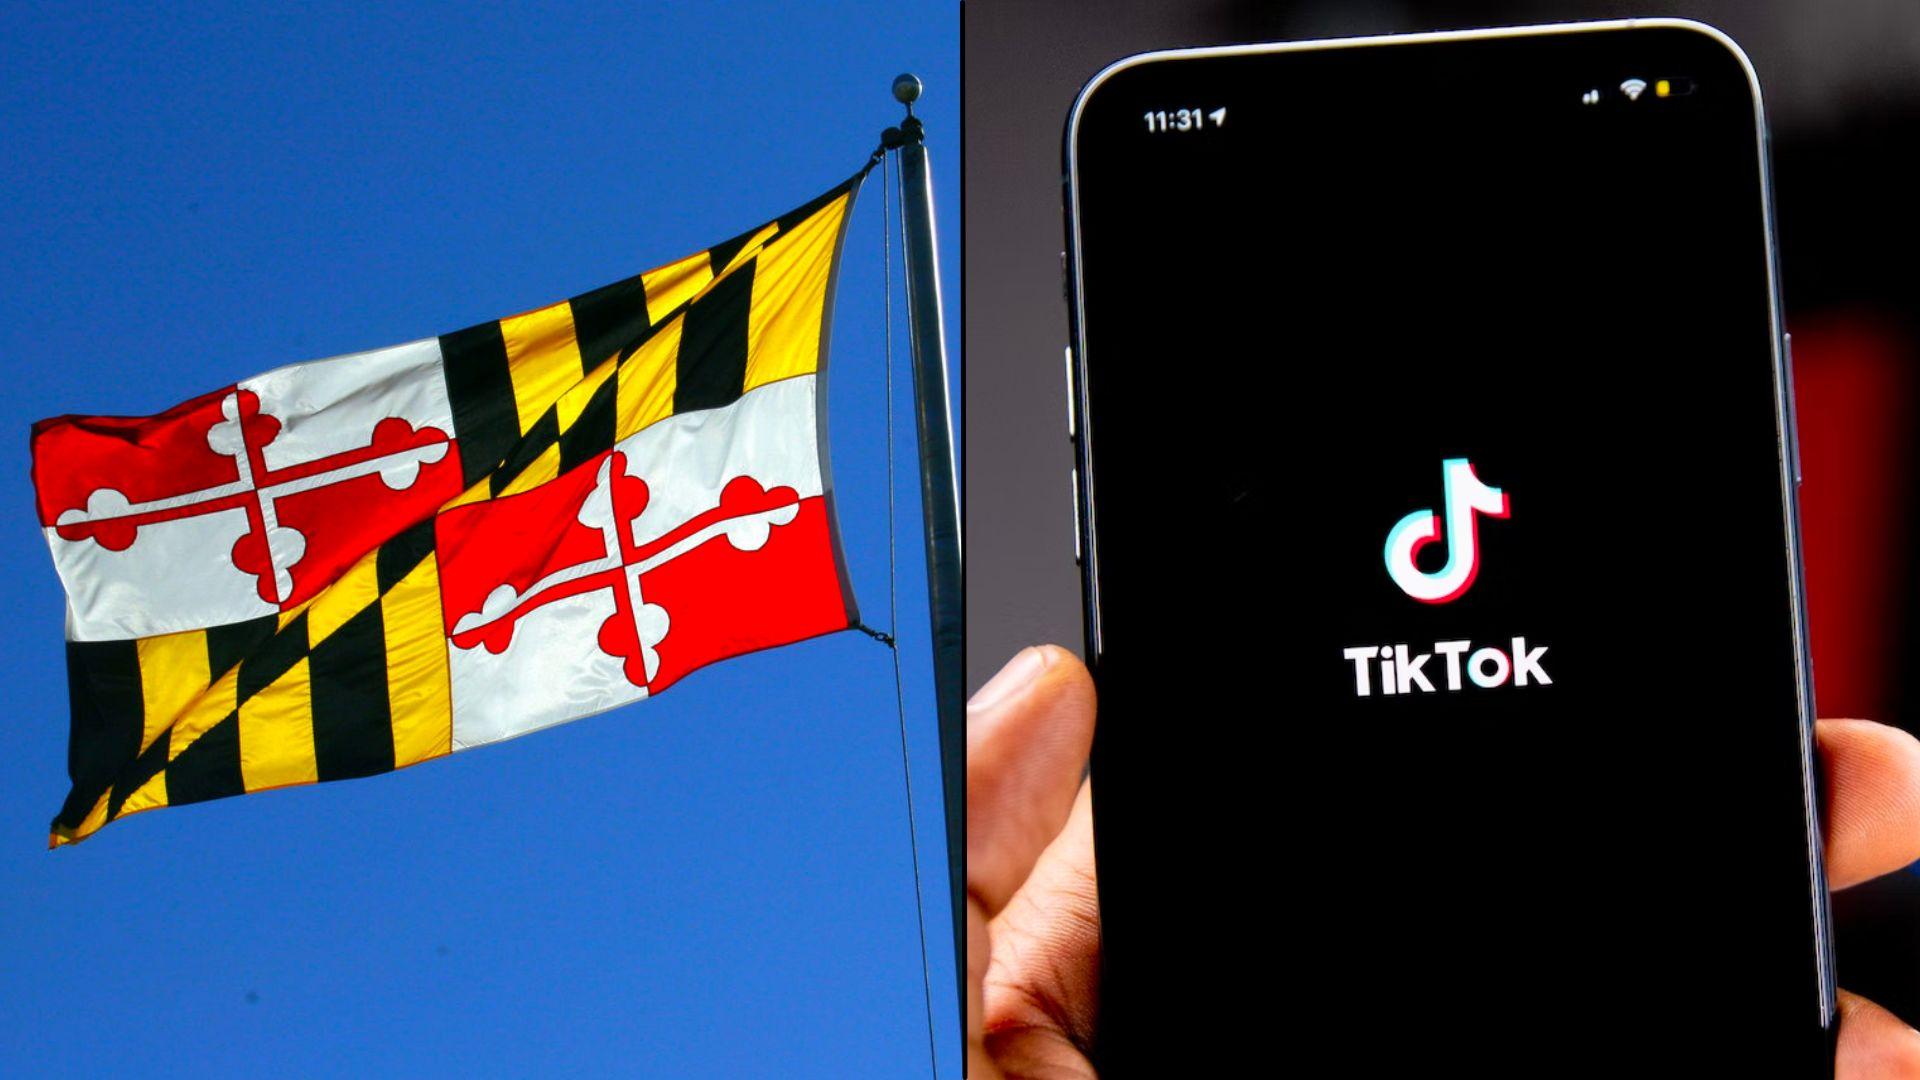 TikTok on phone screen next to Maryland flag waving in sky